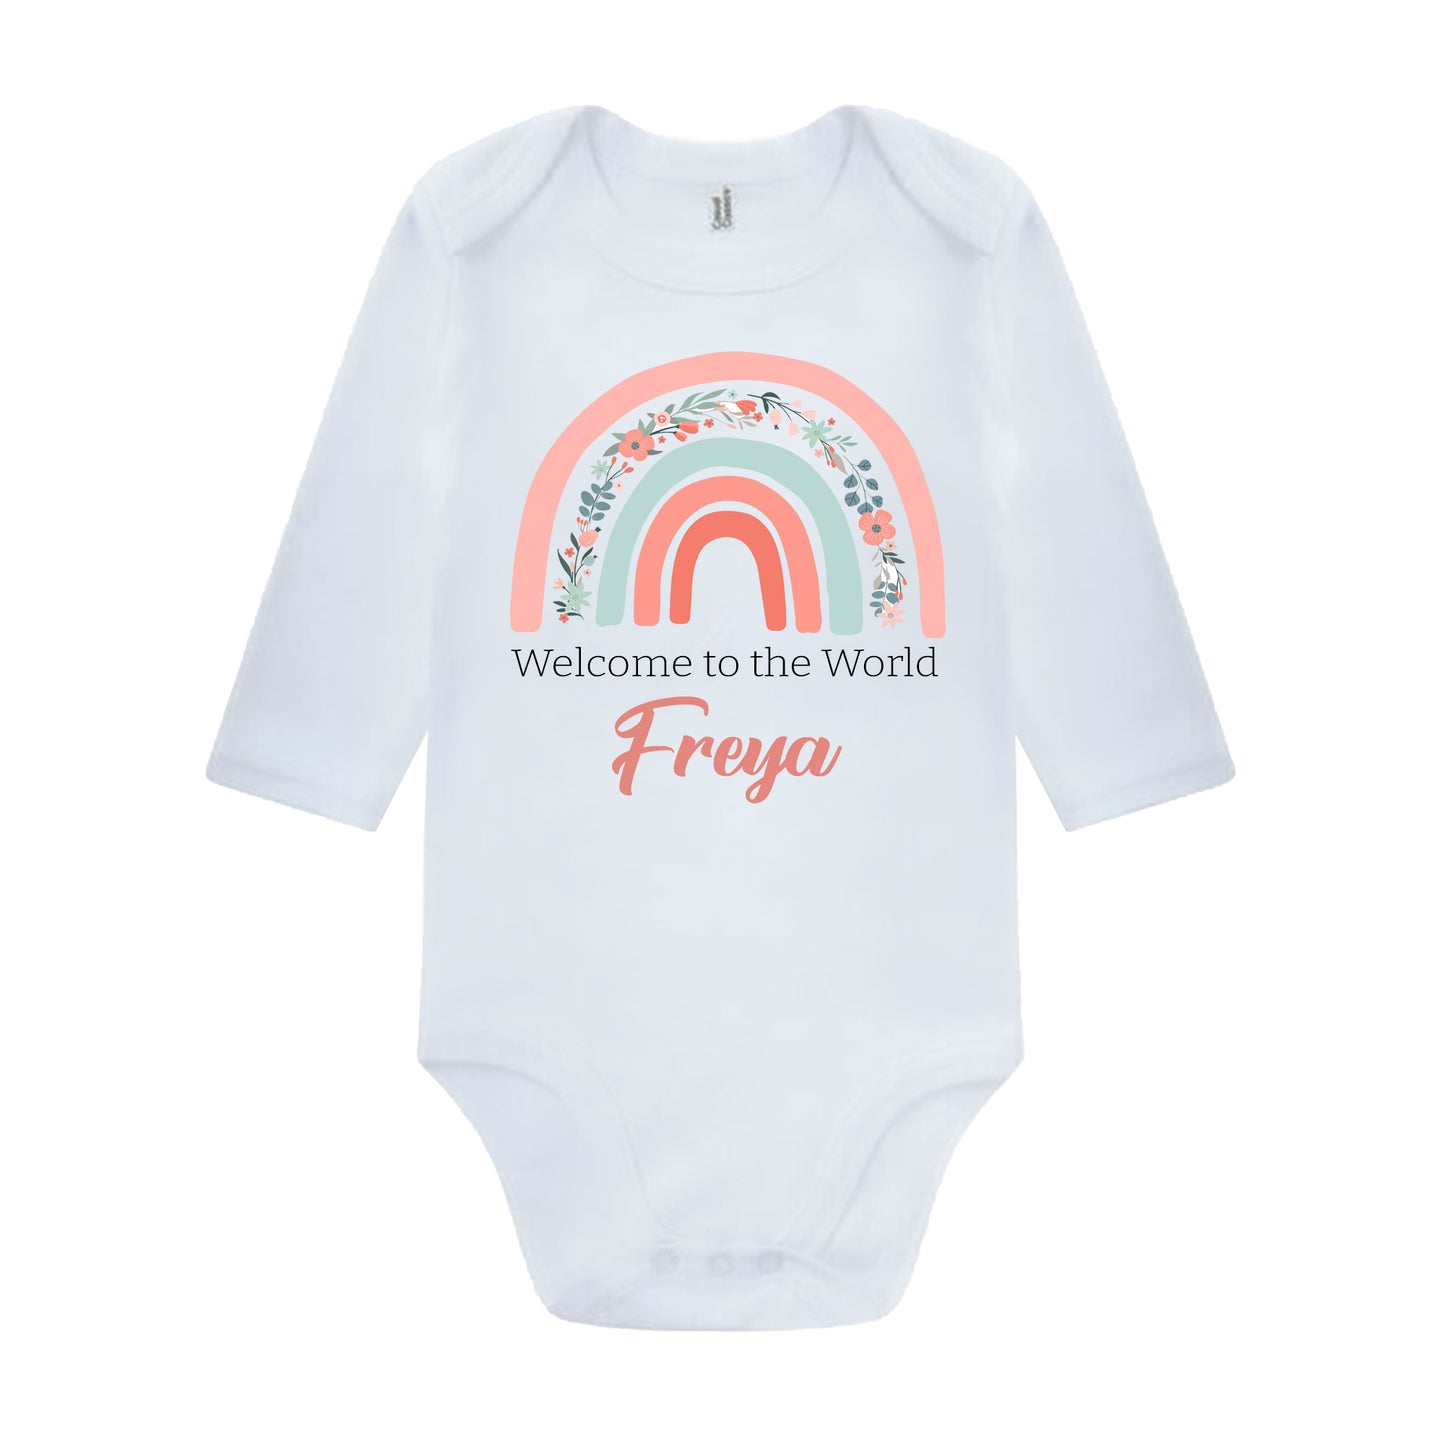 Personalised Hello World Babygrow Sleepsuit